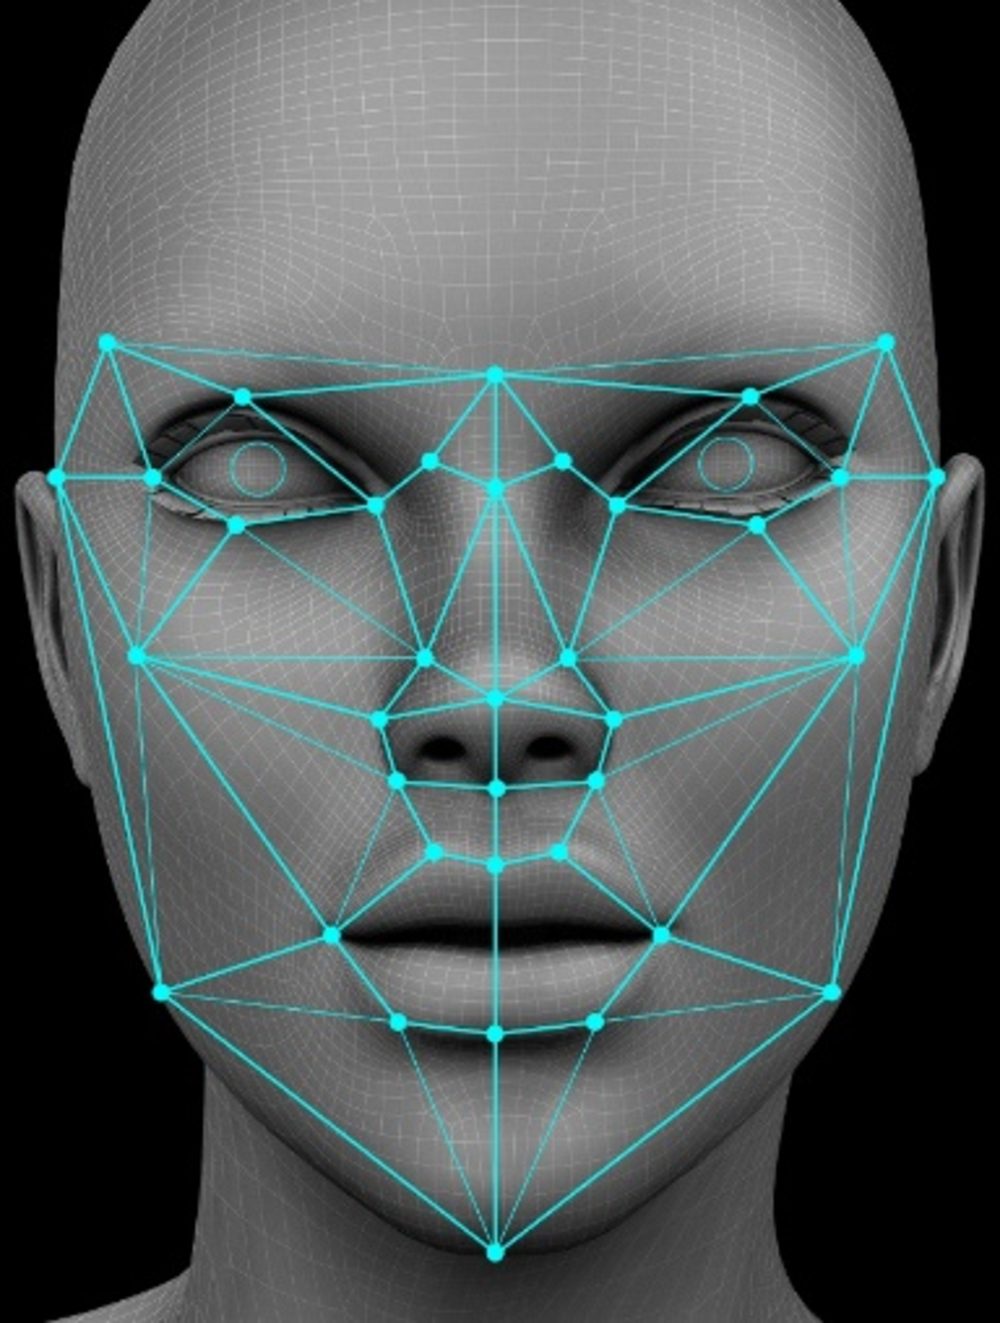 Figure 3.4. Illustration of face-recognition software